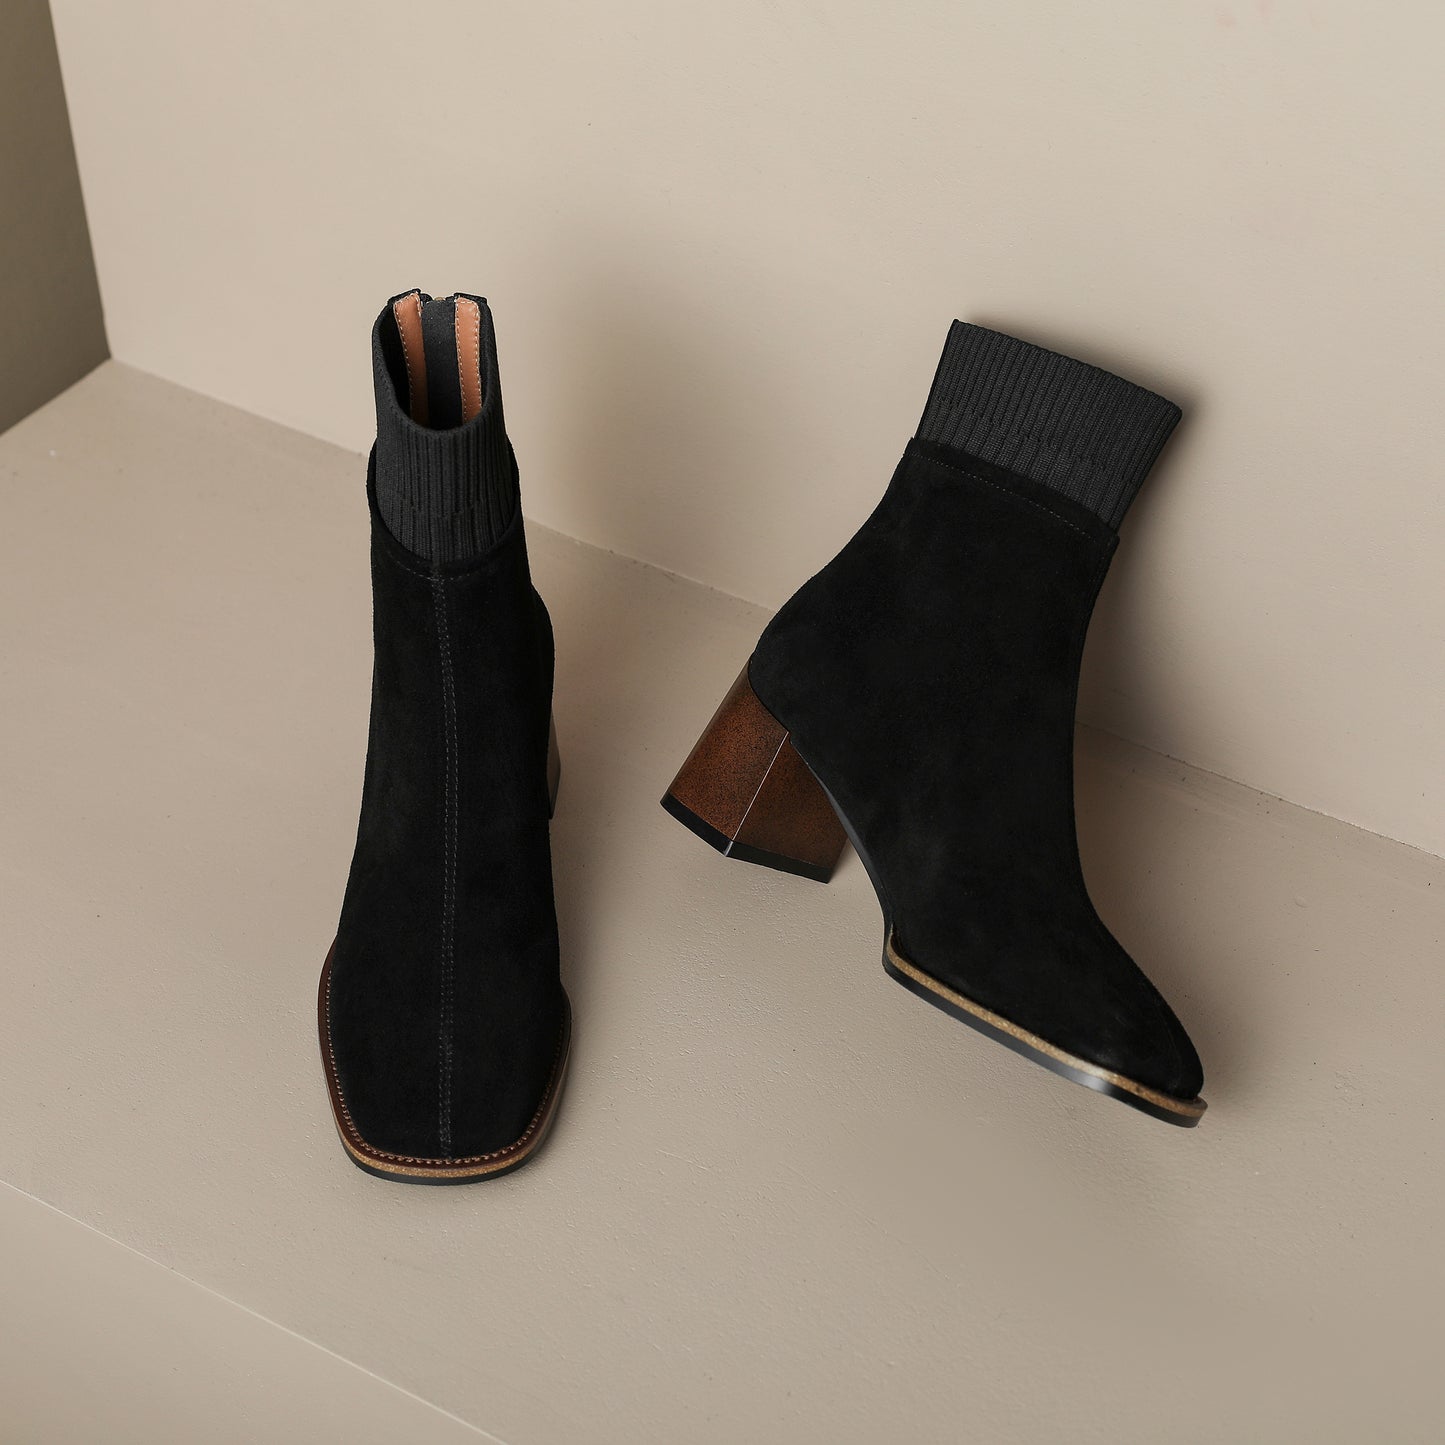 TinaCus Women's Handmade Suede Leather Block Heel Back Zip Up Ankle Boots